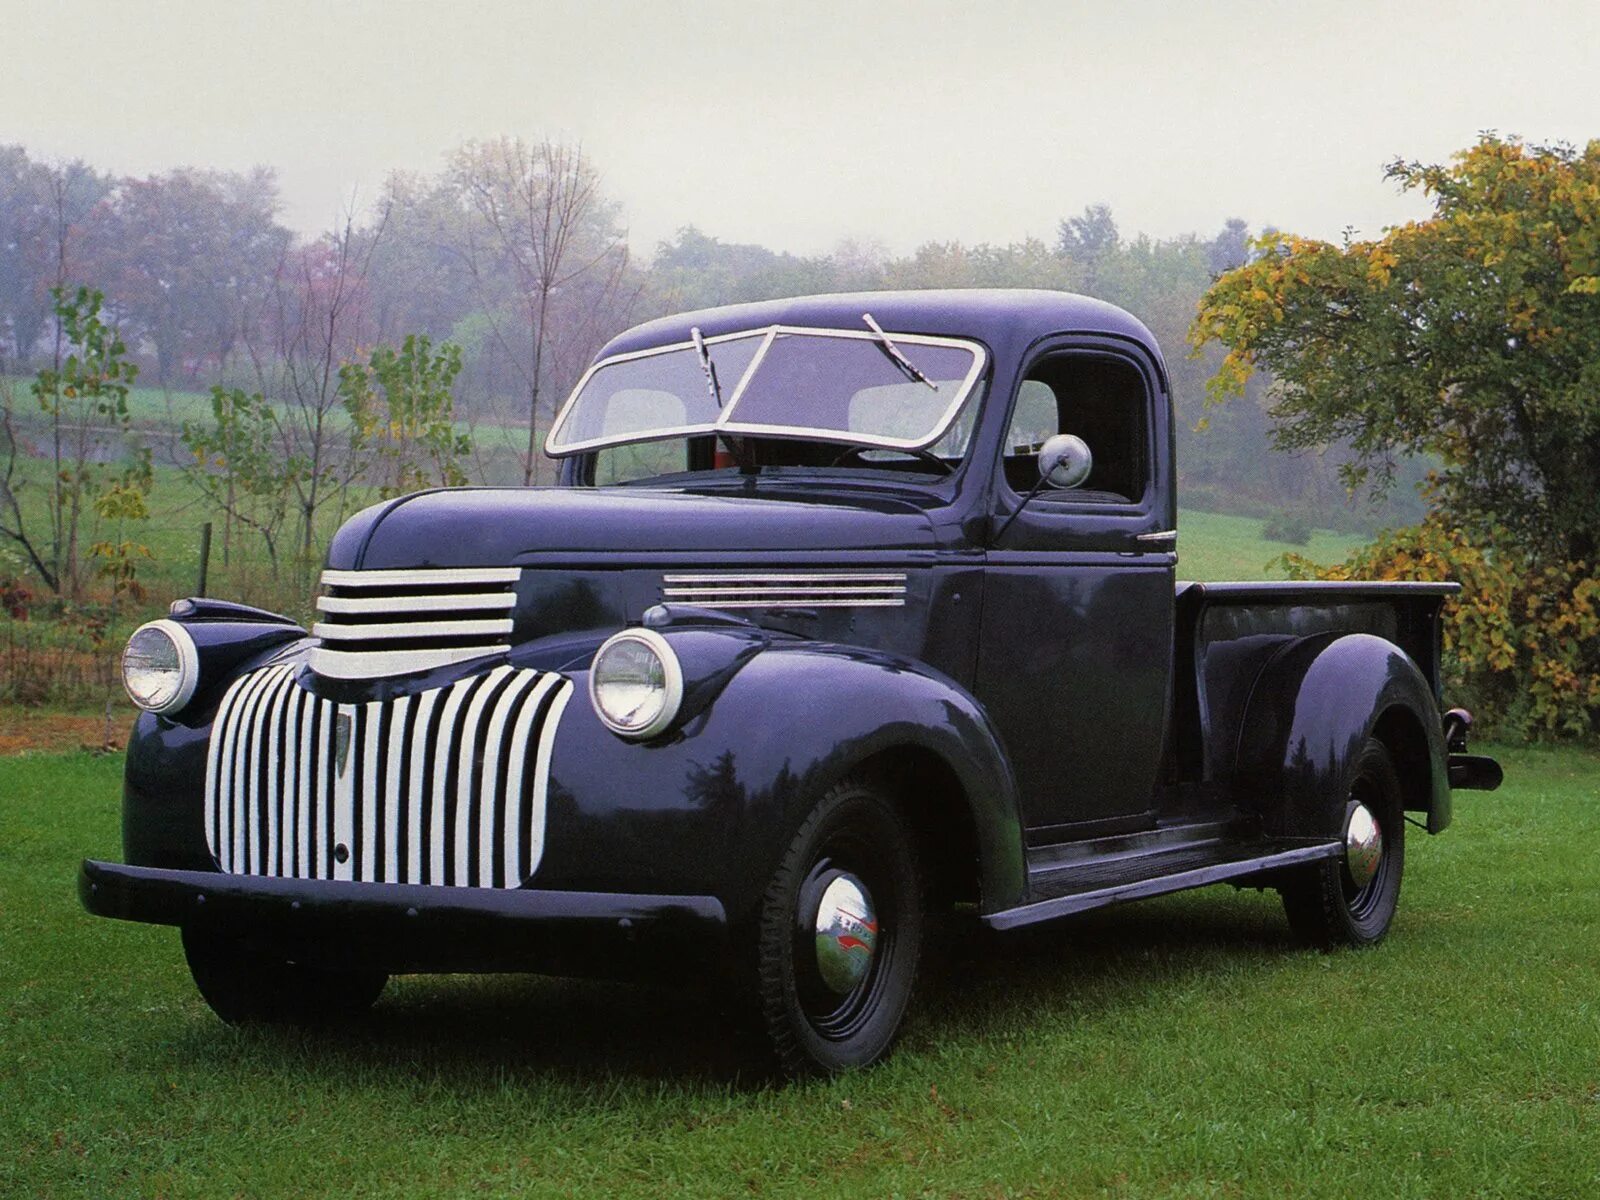 Pick up re. Chevrolet Pickup 1941. Chevrolet Truck 1941. 1941 Chevrolet AK. Шевроле пикап Сериес.